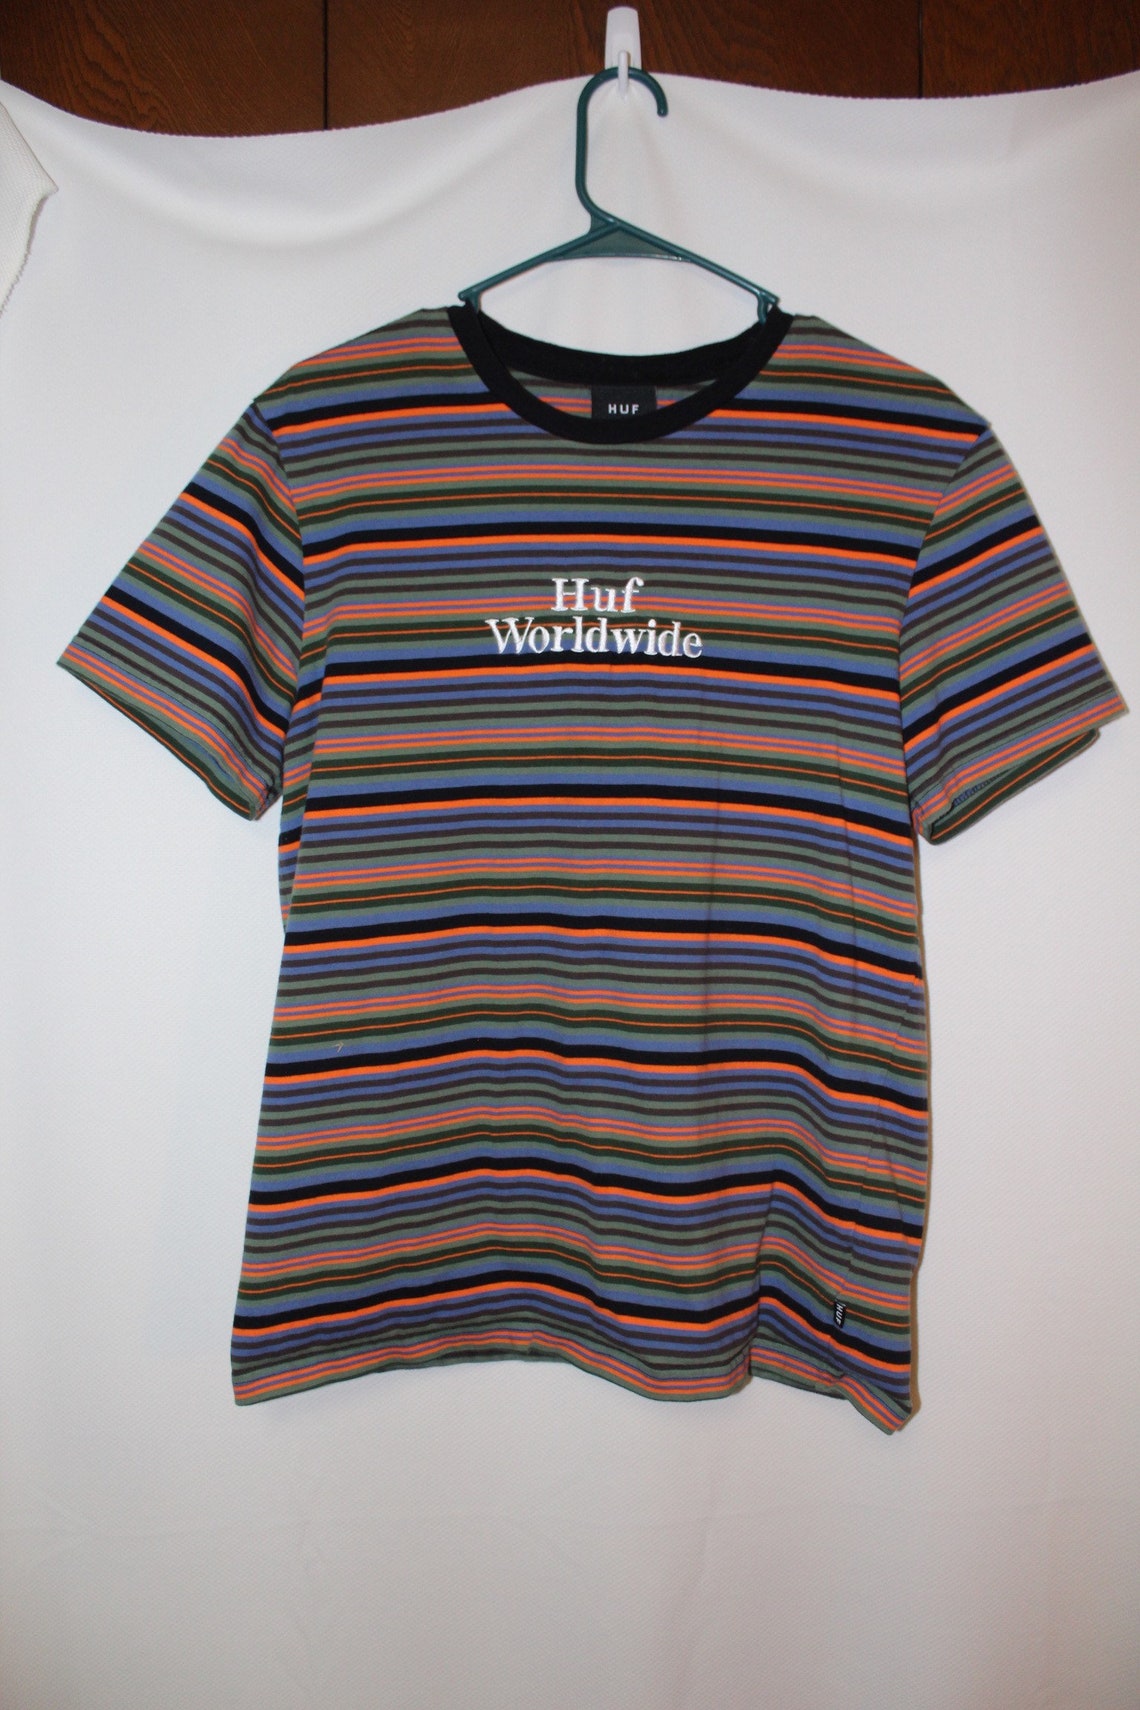 Huf Worldwide stripe T-shirt | Etsy